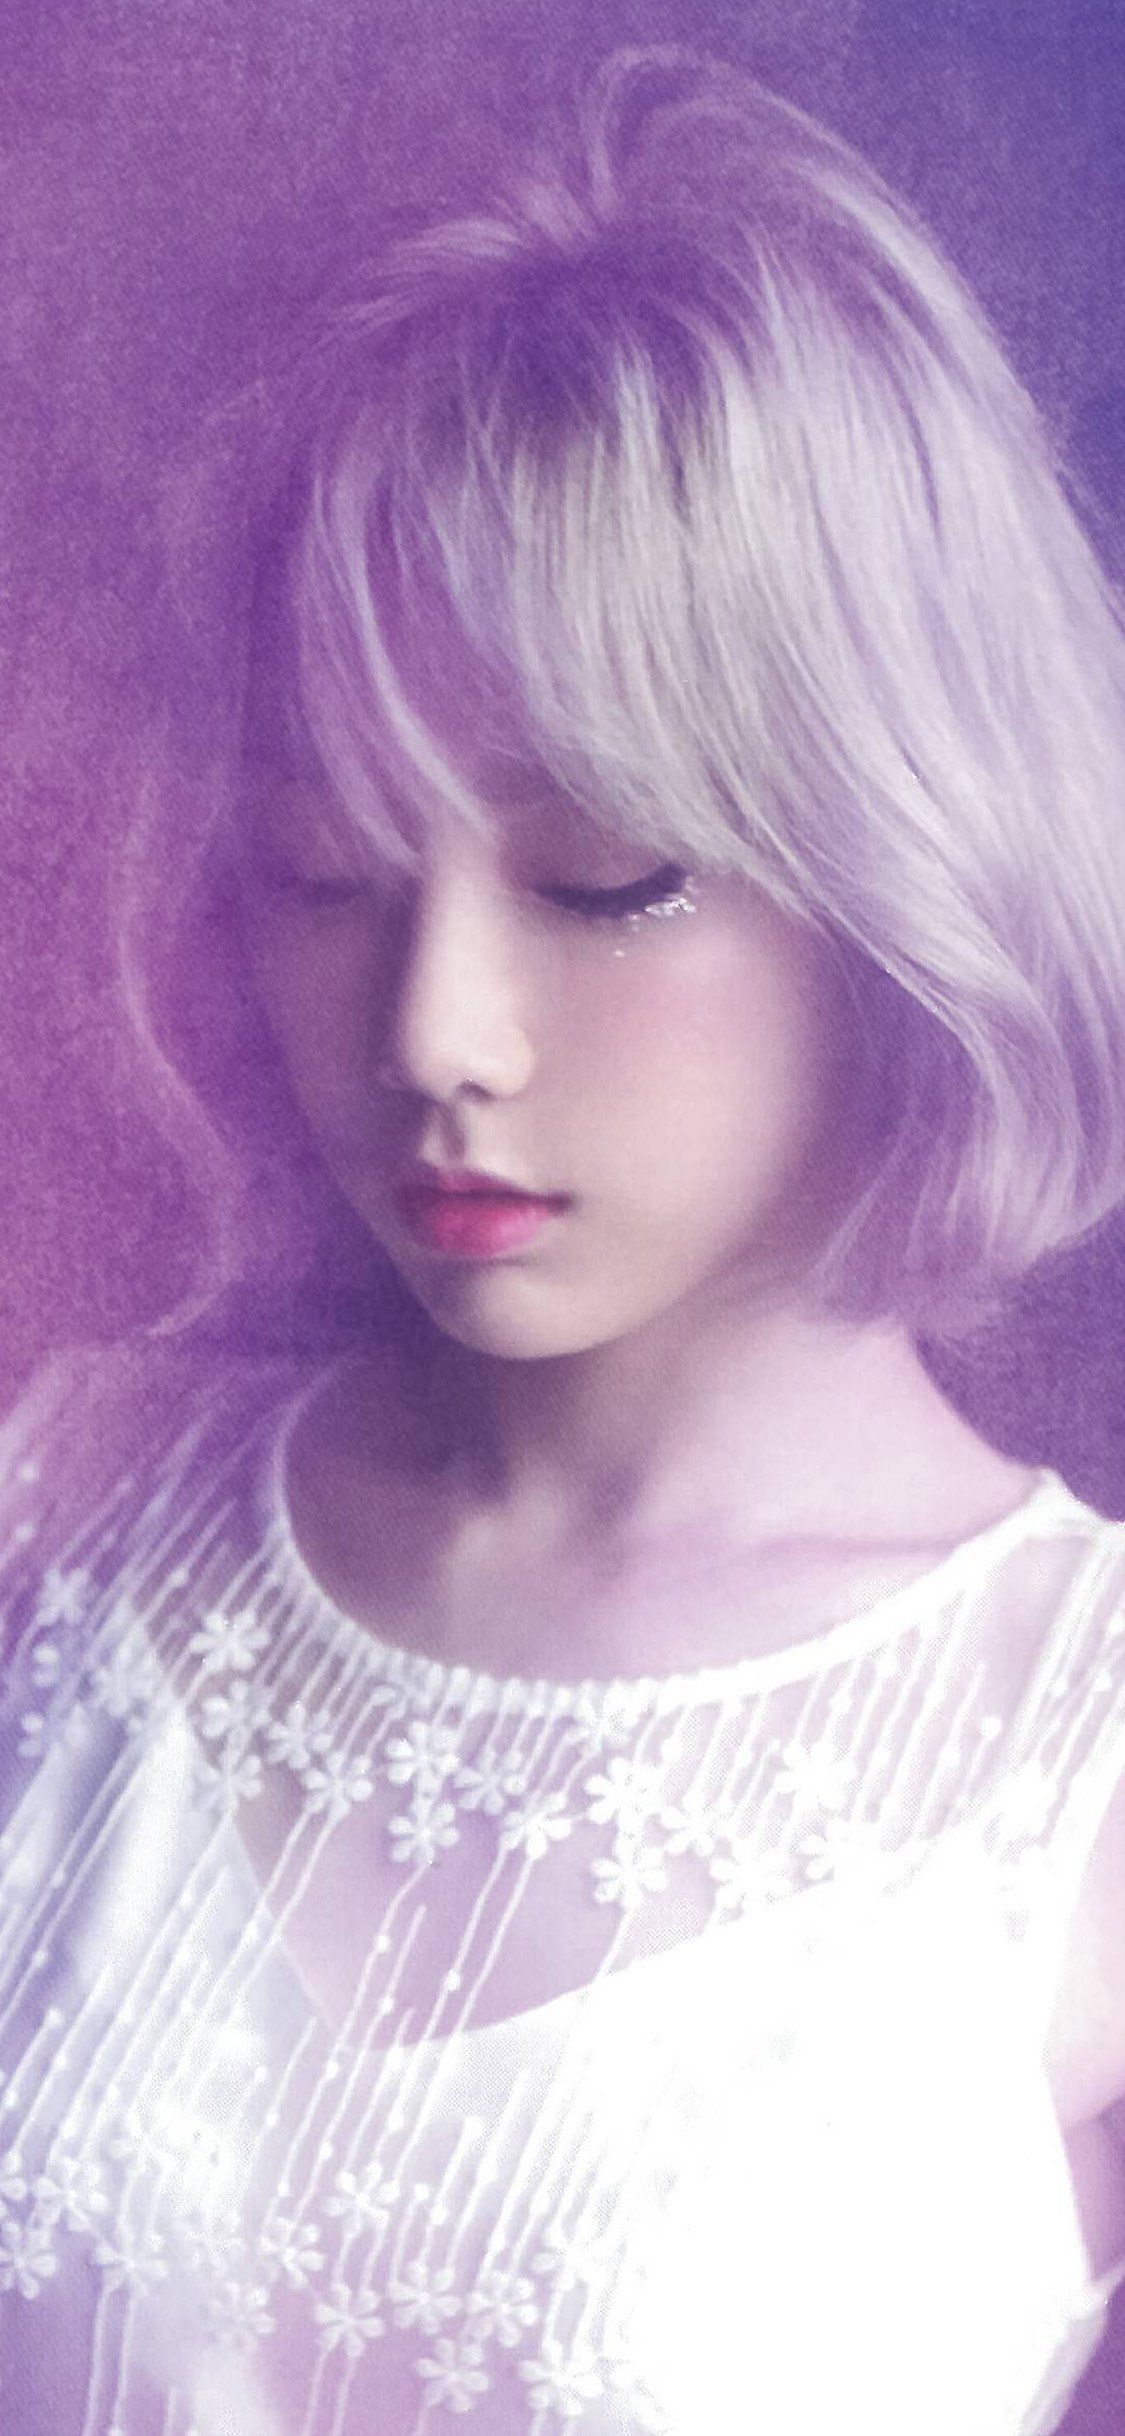 Taeyeon Kpop Girl Asian Purple iPhone X Wallpaper Free Download